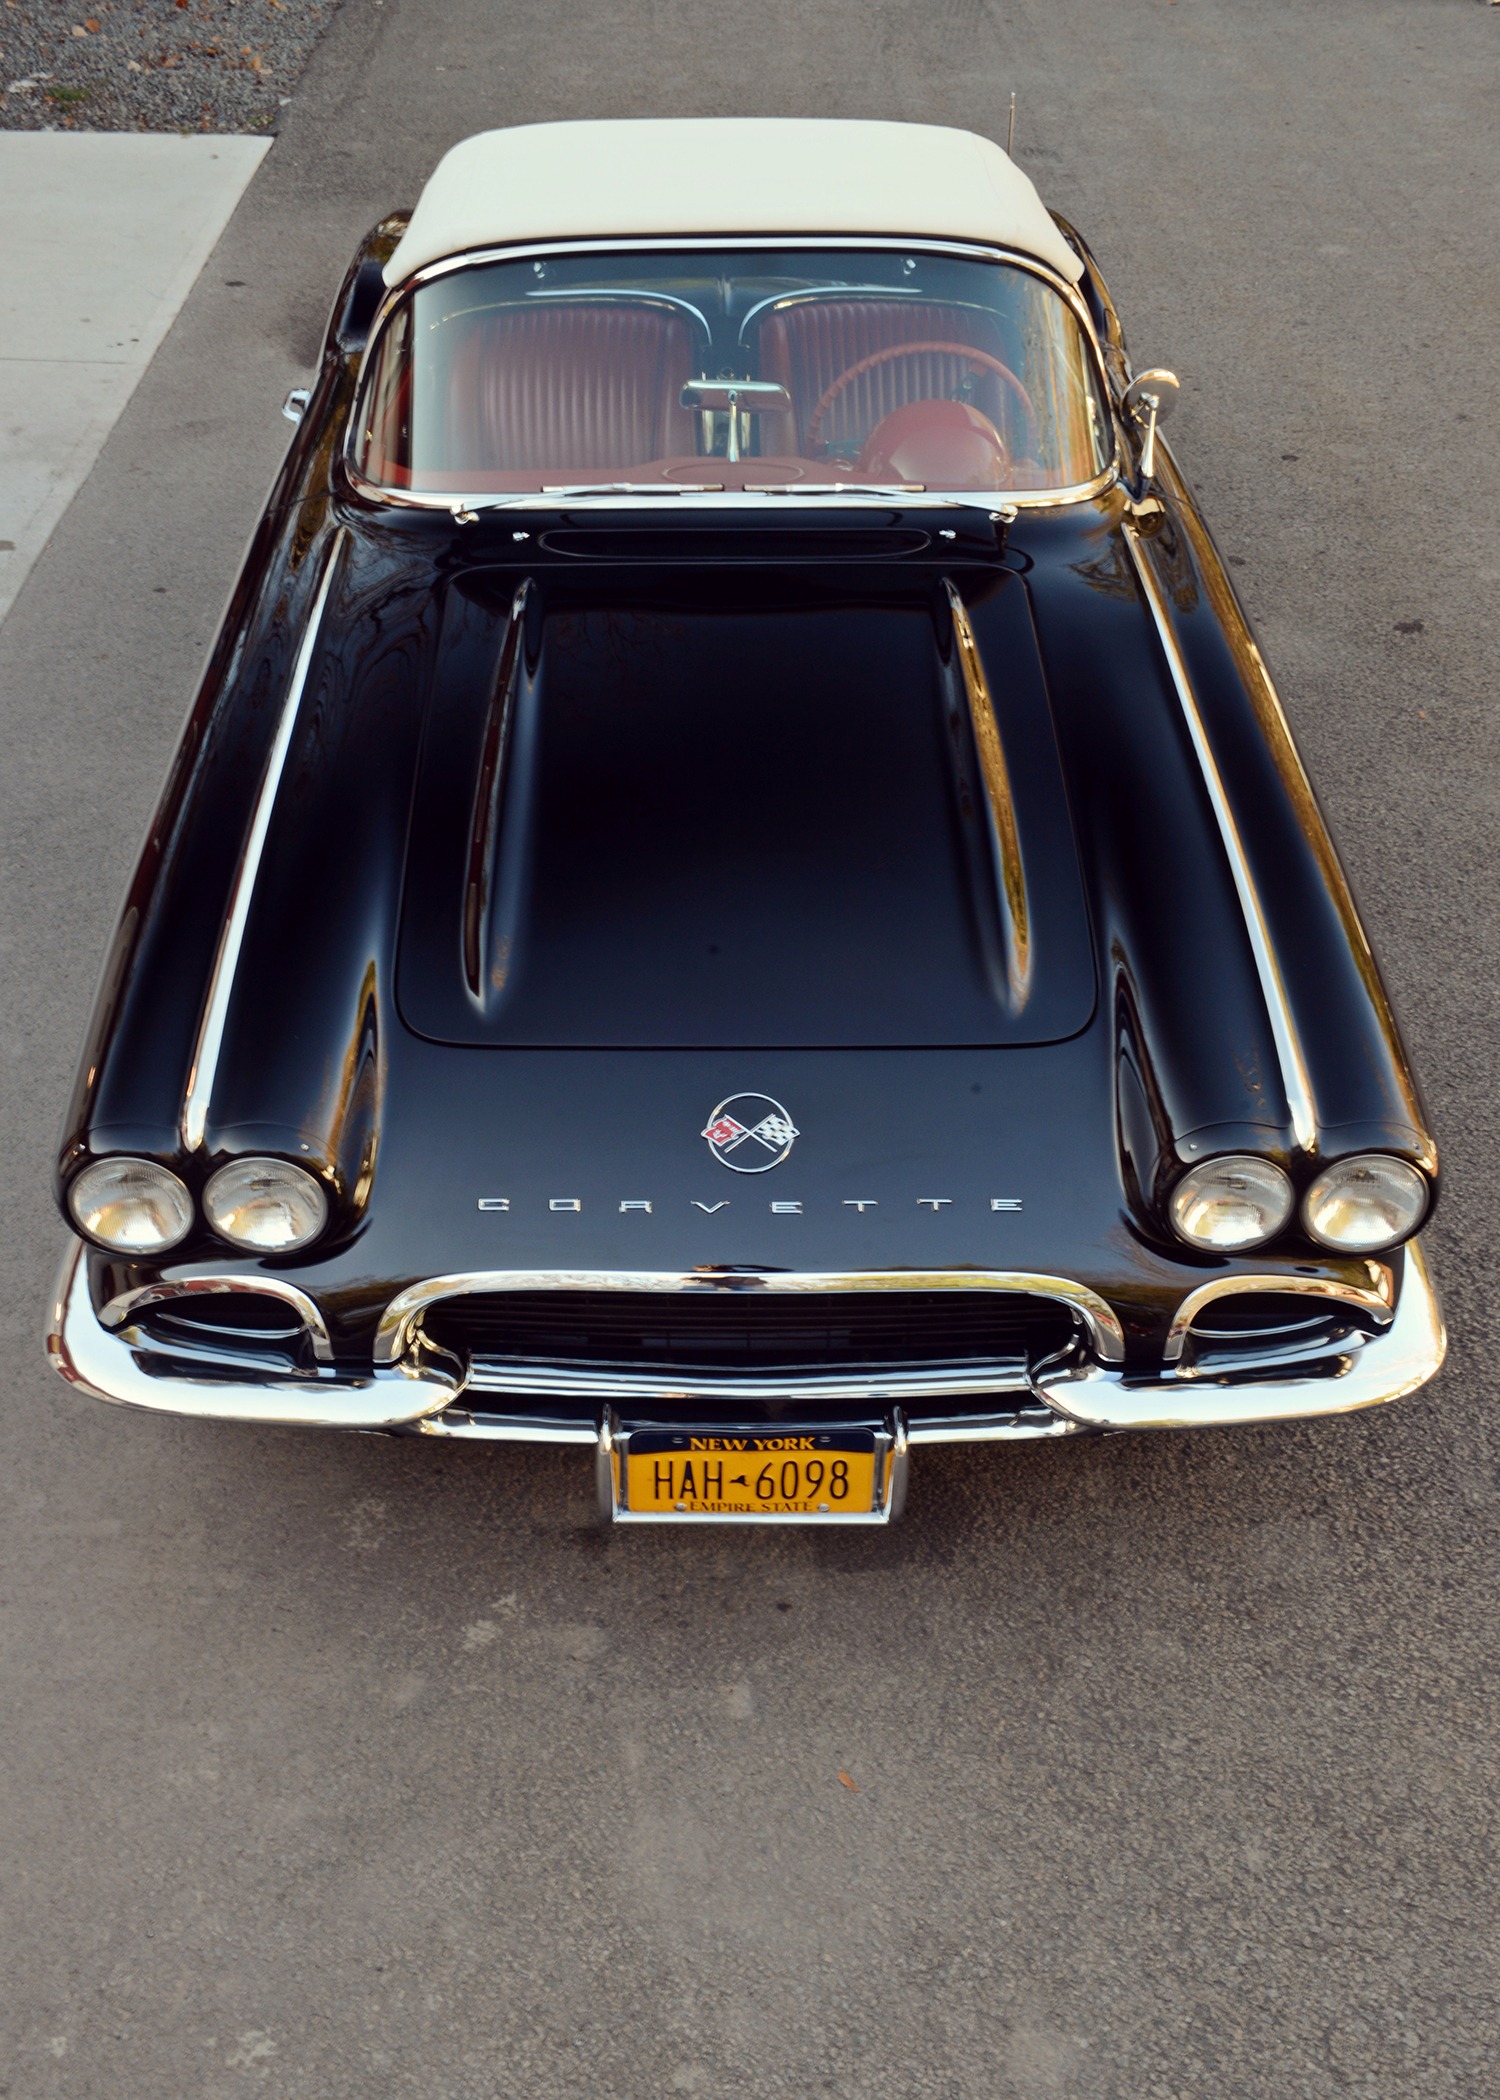 1962 Chevrolet Corvette - Auto, Photo, Chevrolet, Chevrolet corvette, Retro car, Automotive classic, Longpost